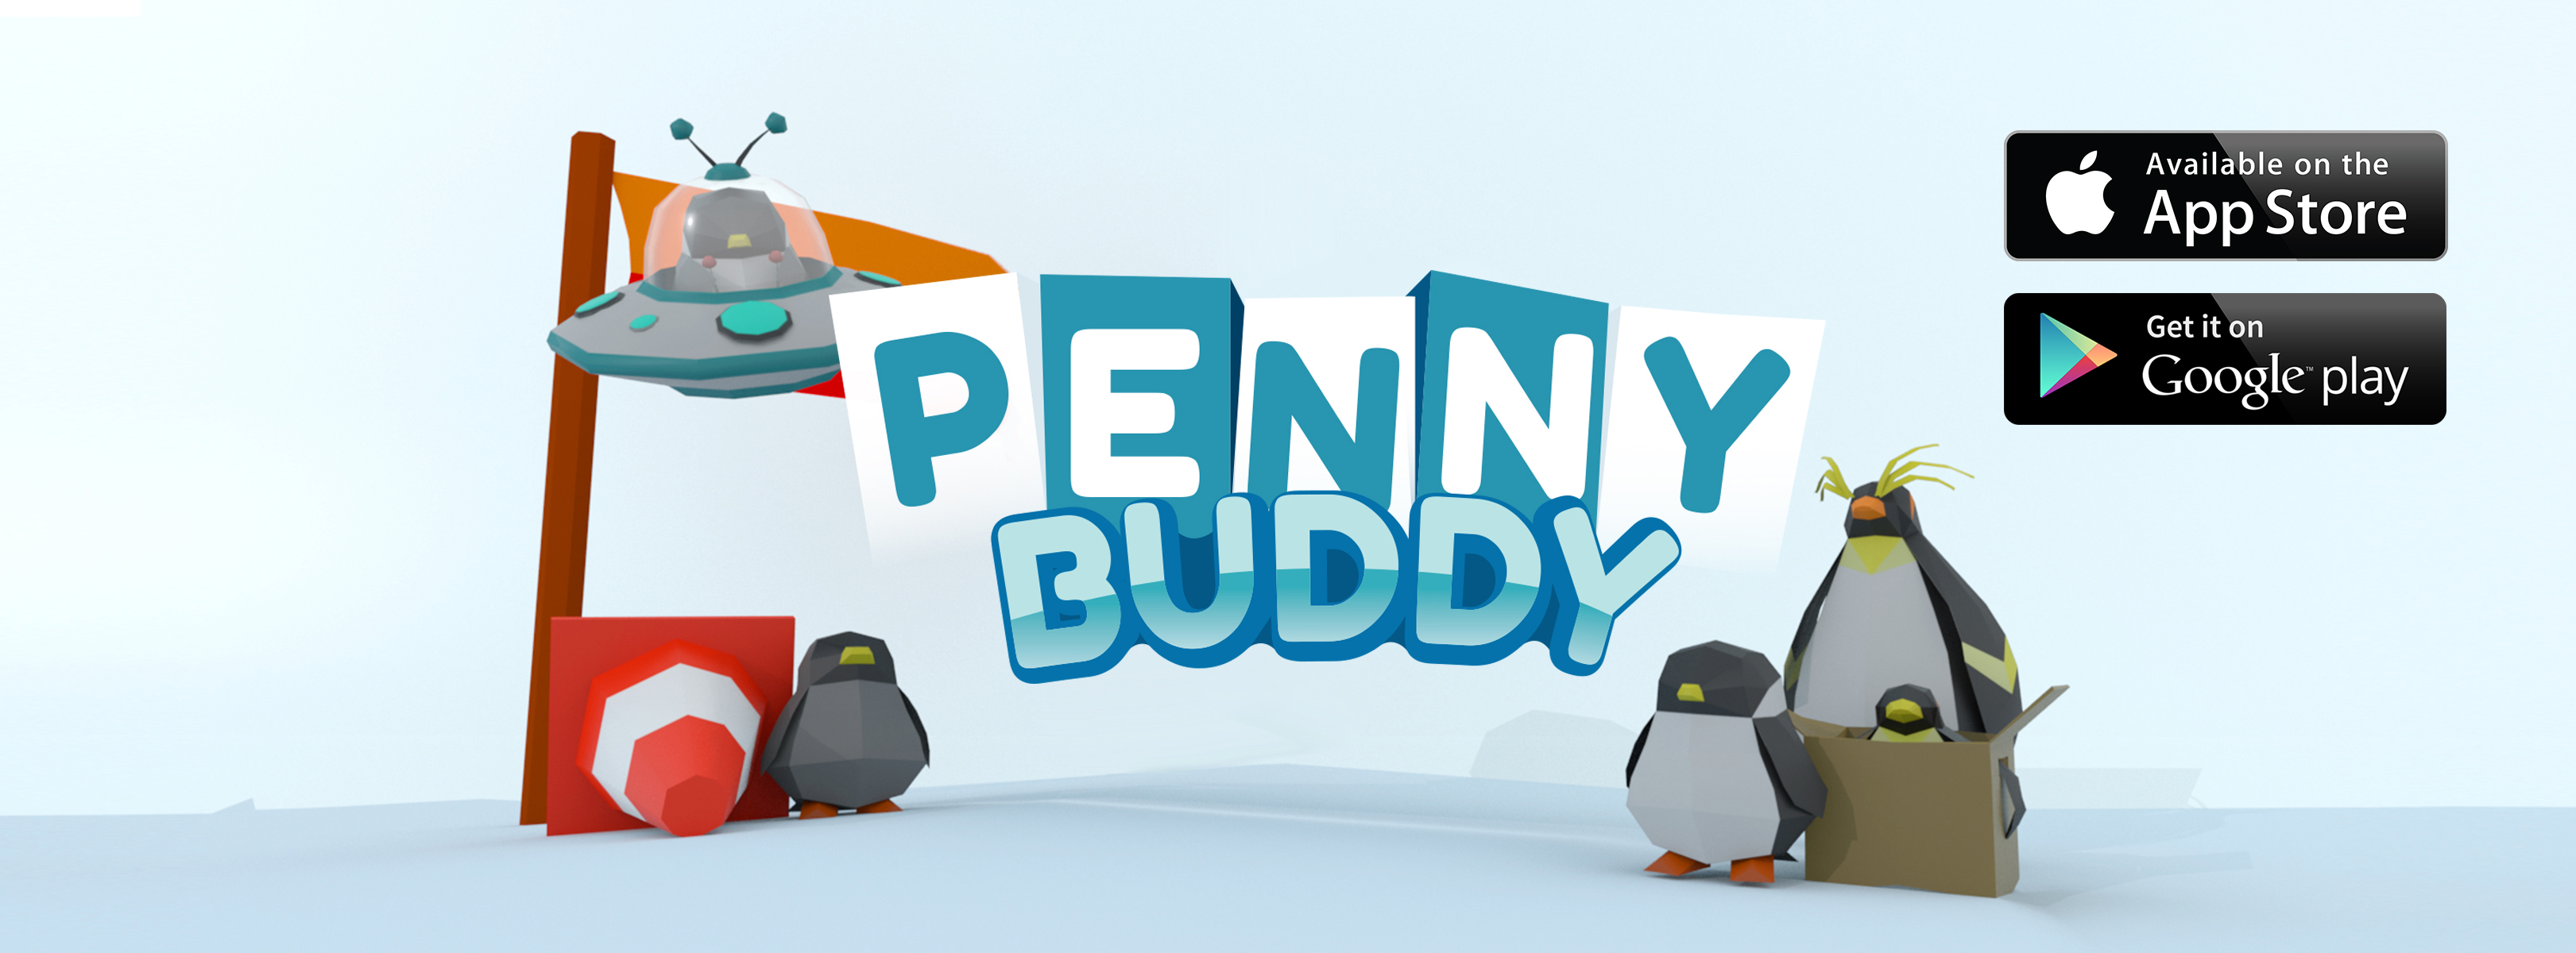 Penny Buddy